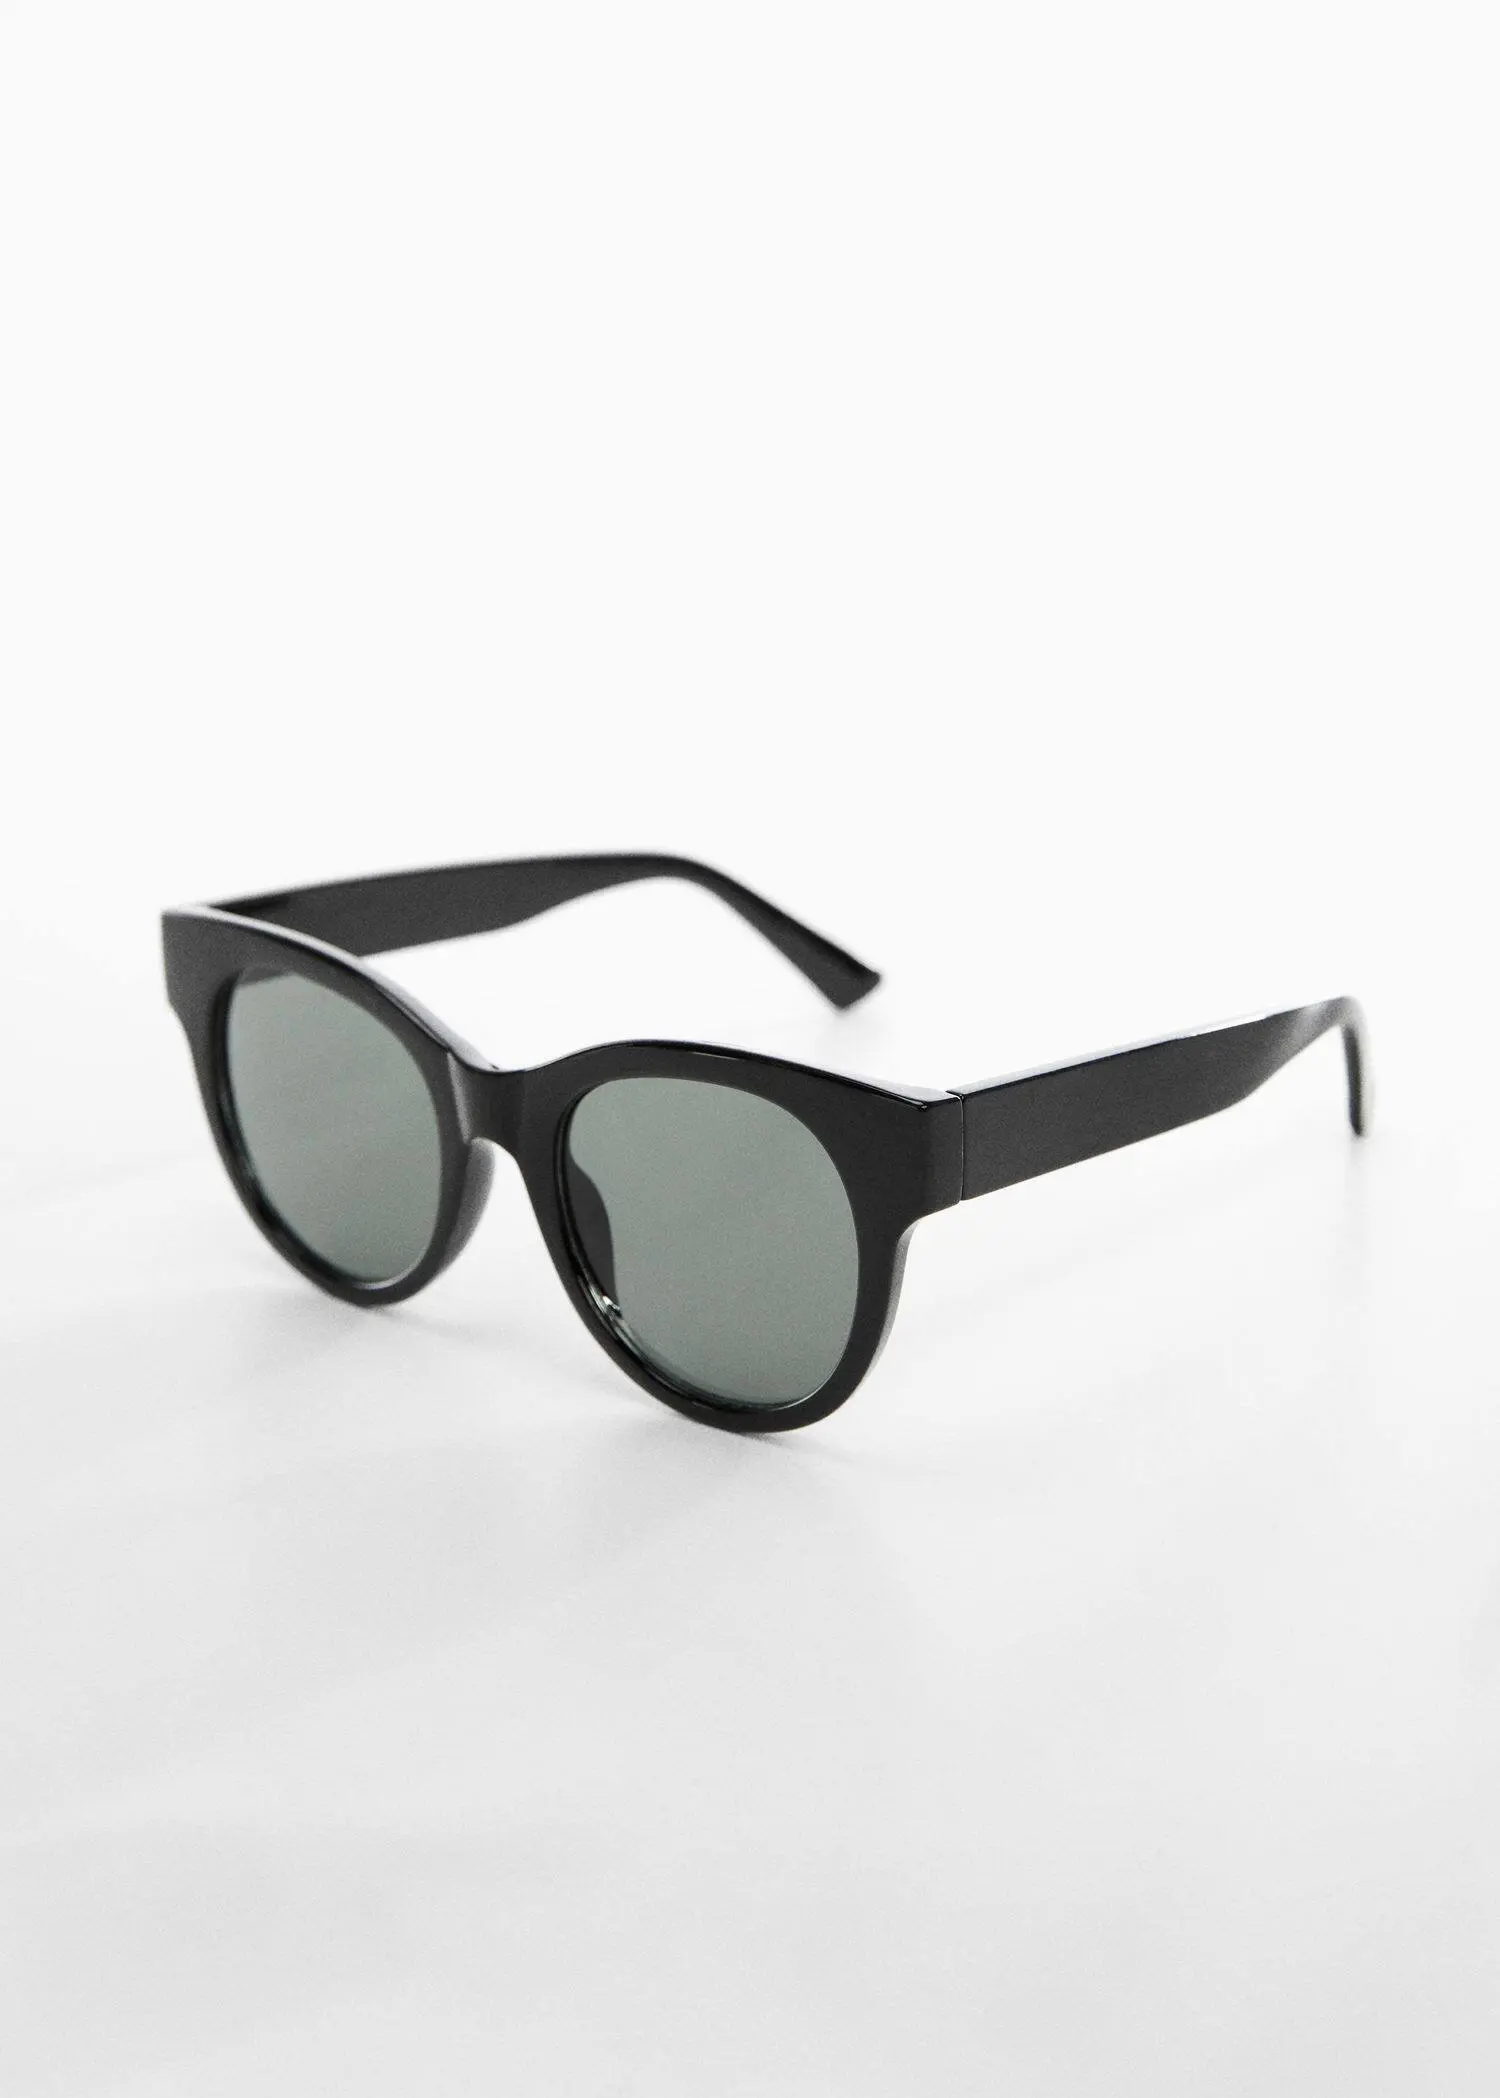 Mango Tortoiseshell sunglasses. a pair of sunglasses on a white surface. 